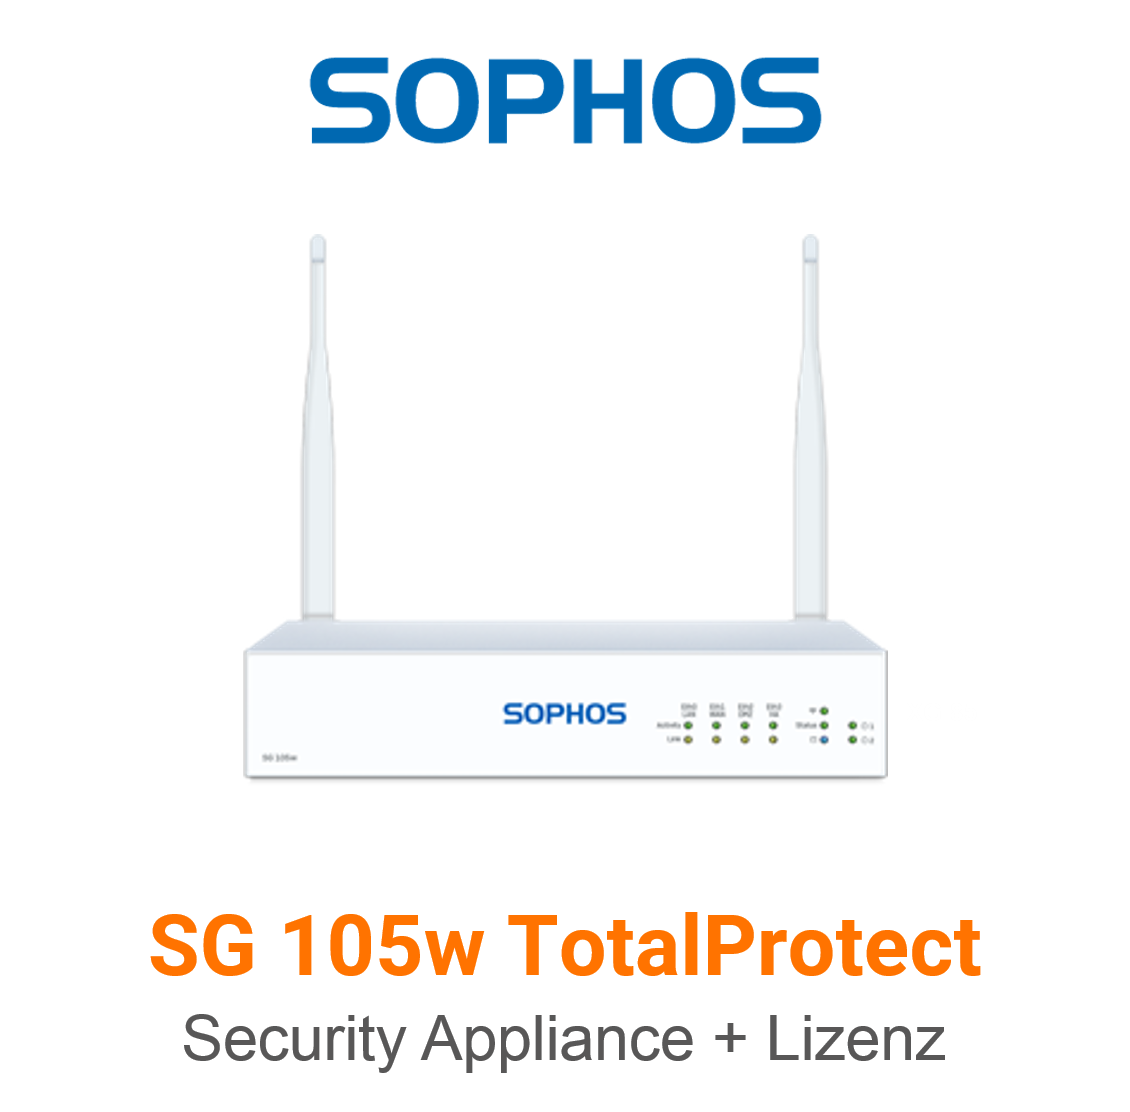 Sophos SG 105w TotalProtect Bundle (Hardware + Lizenz)